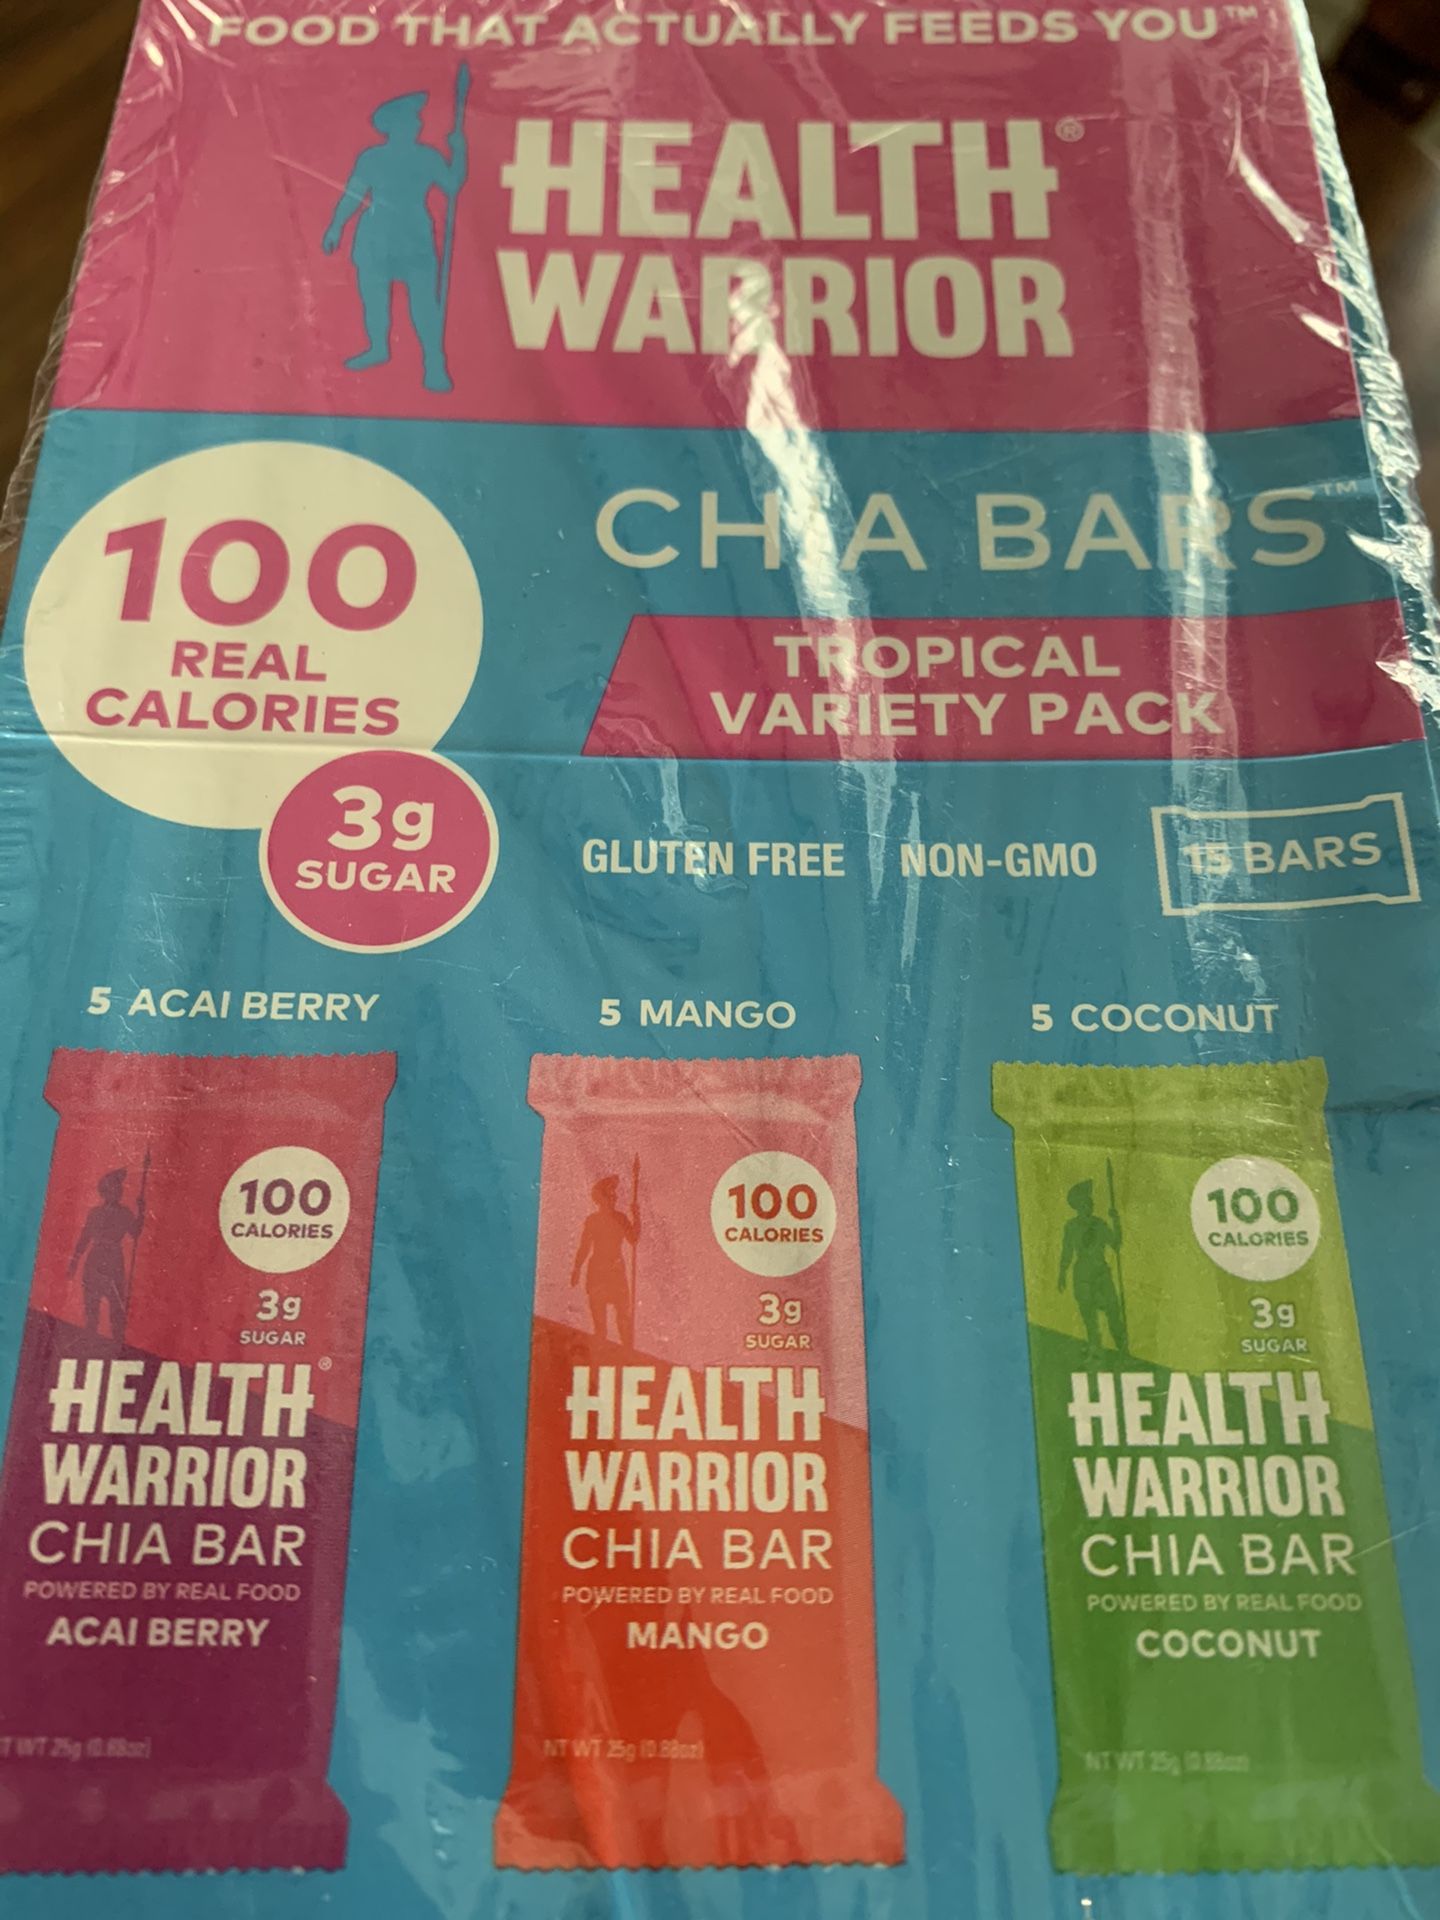 Health warriors Chia bars